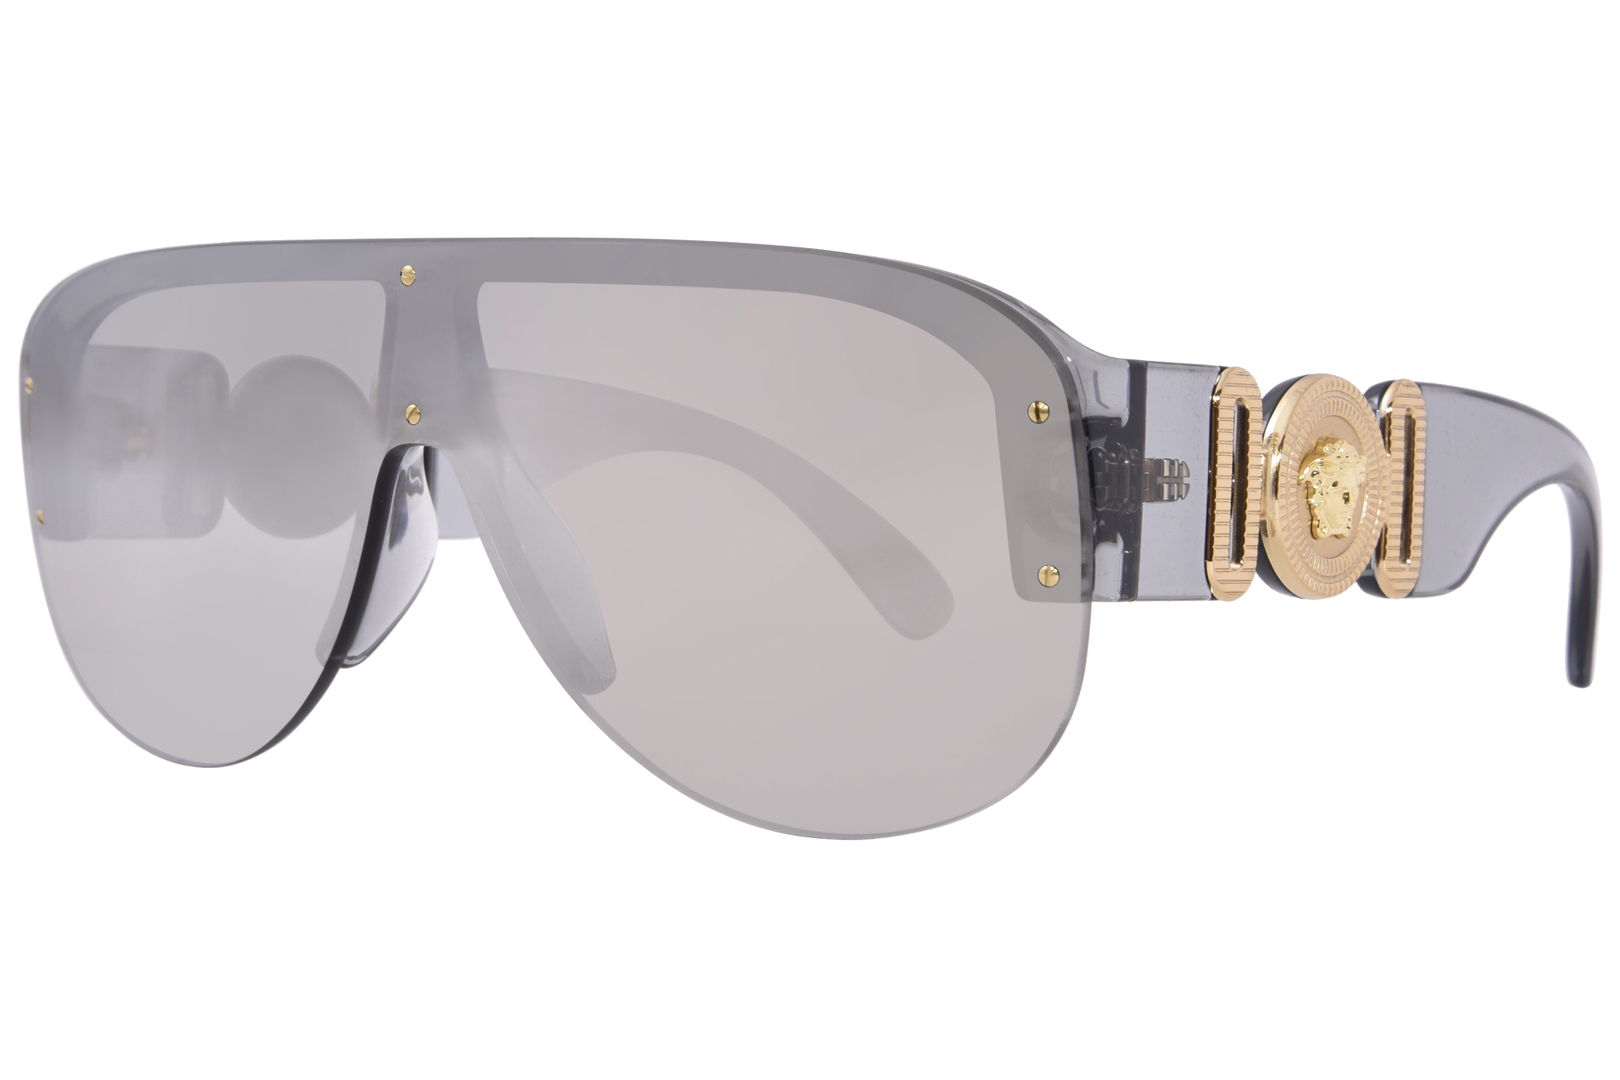 Carrera Cool Sunglasses Men's Rectangle Shape